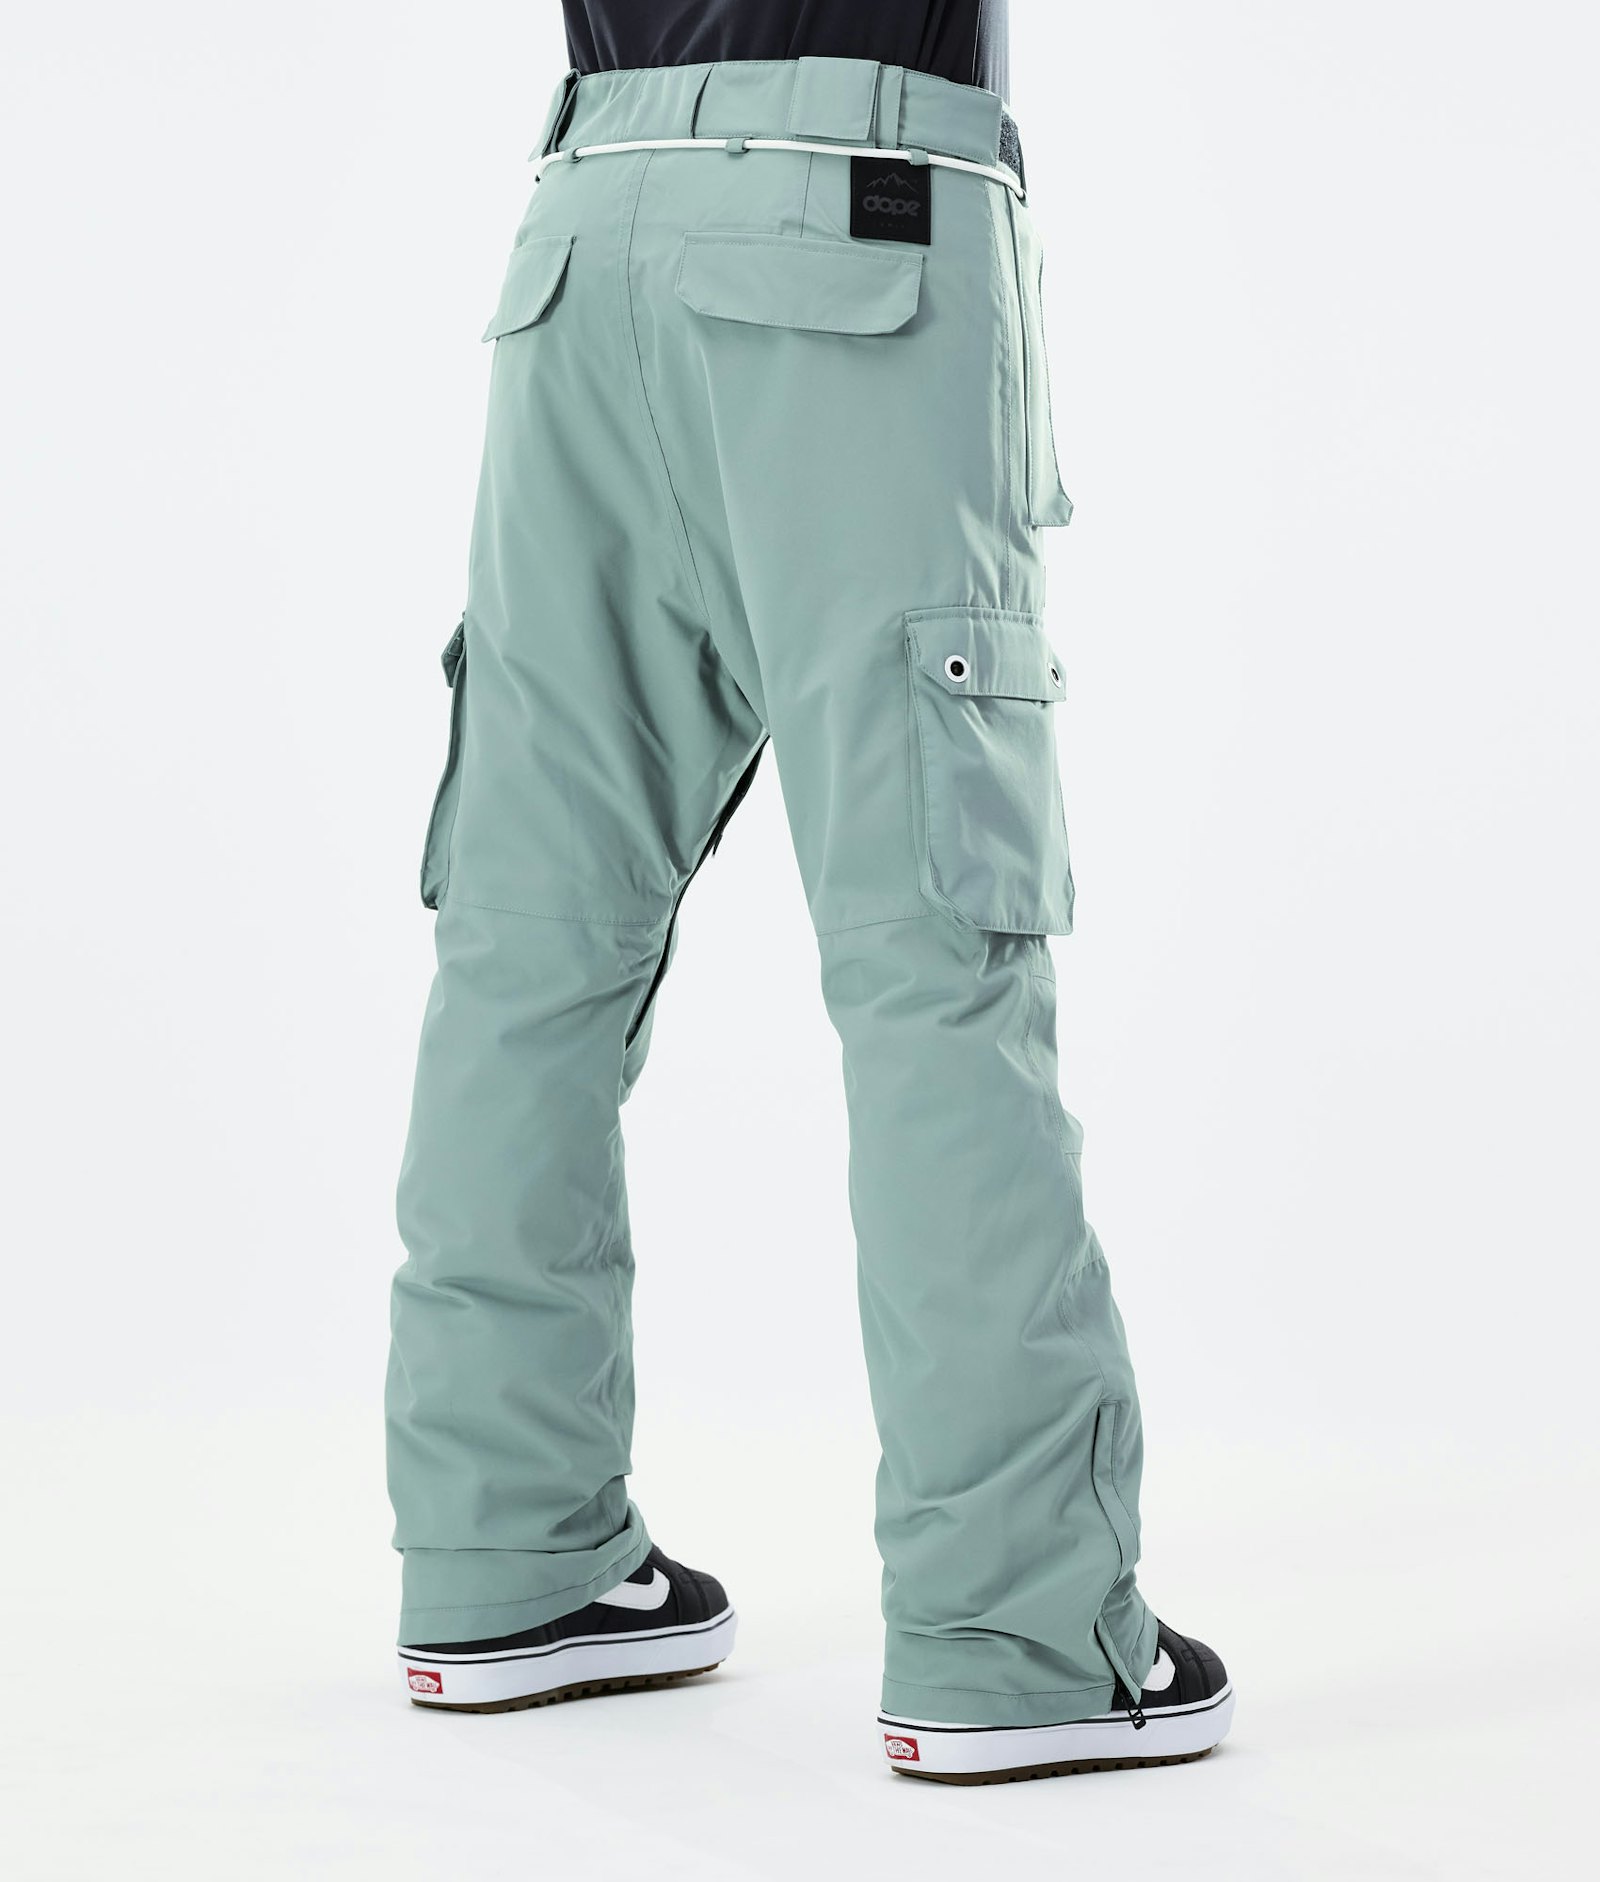 Aperture Green 10000mm Snowboard Pants Women's Medium Ski Adjustable Waist